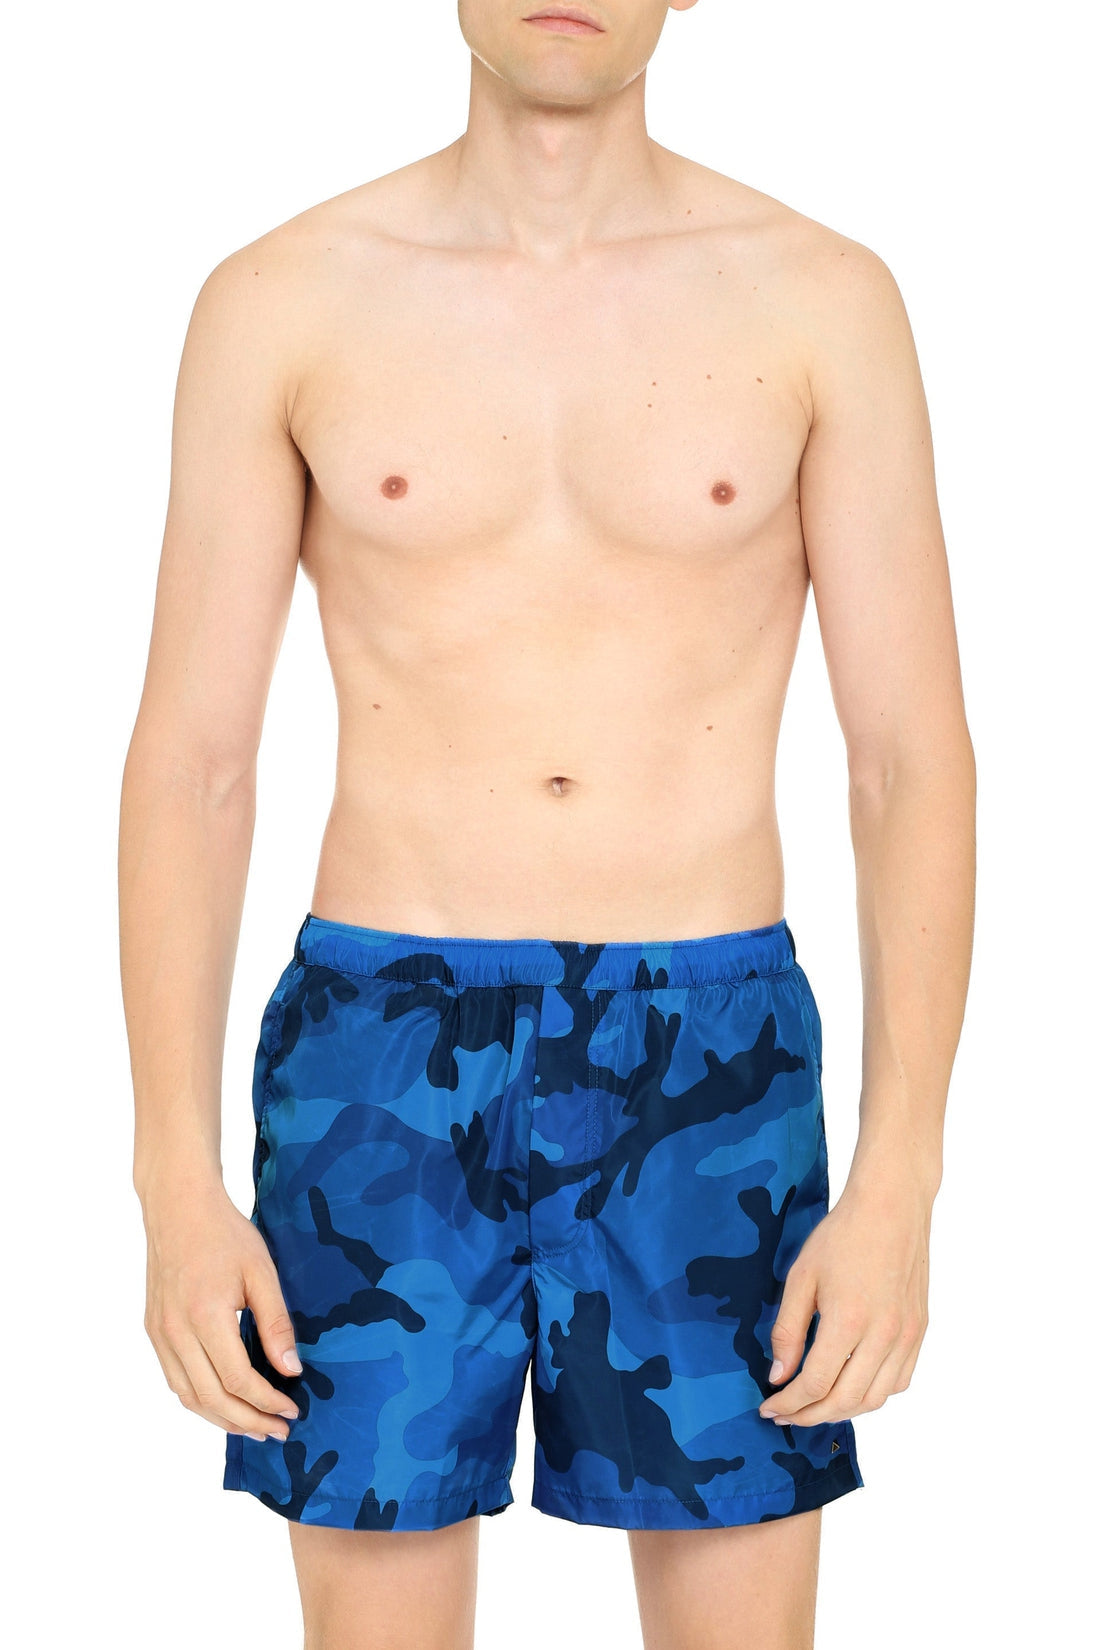 Valentino-OUTLET-SALE-Printed swim shorts-ARCHIVIST